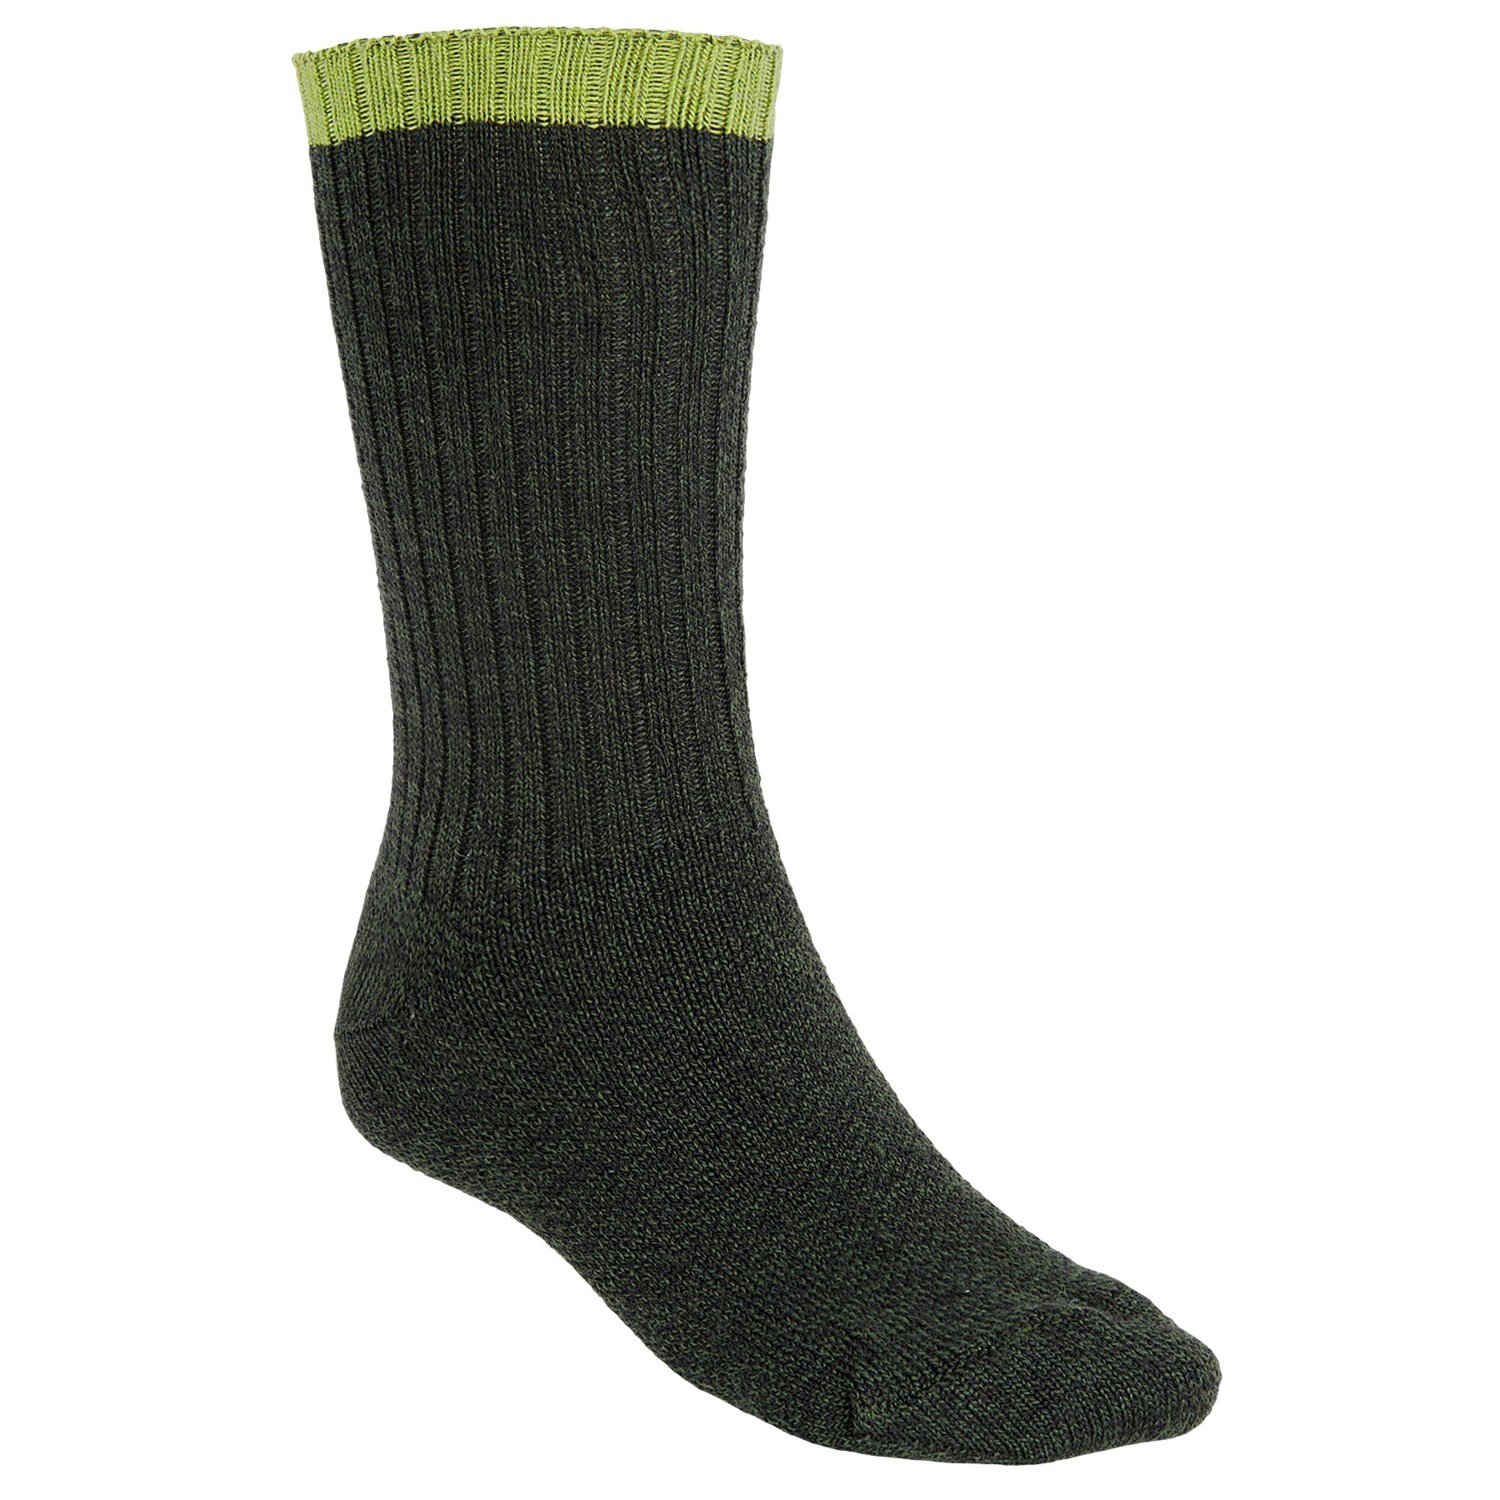  Adventurer Socks  Merino Wool. Midweight For Men in Forest Marl